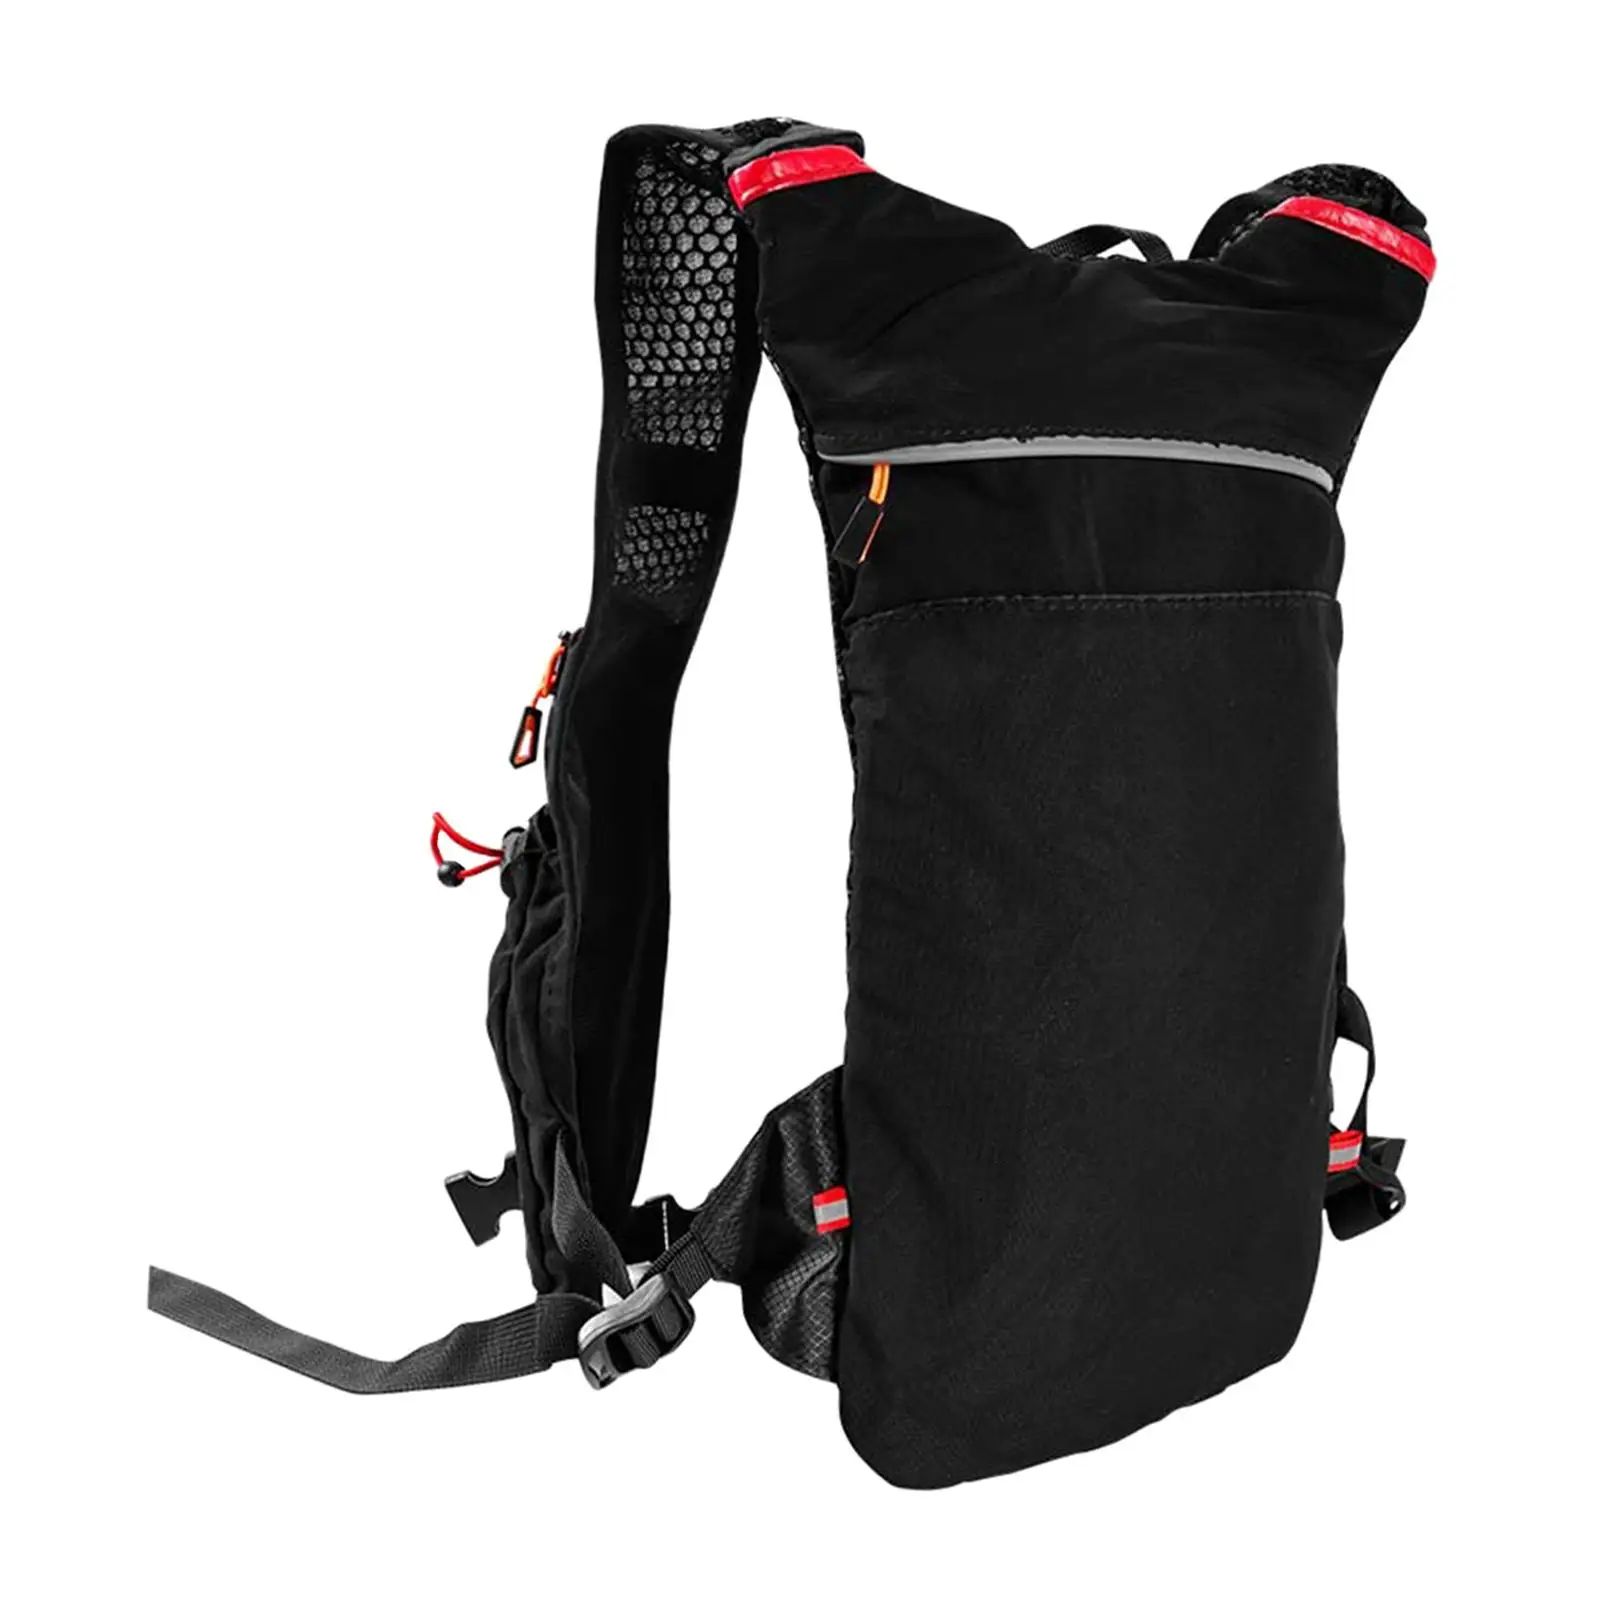 Hydration Backpack Practical Nylon Lightweight Adjustable Shoulder Straps Knapsack for Hiking Outdoor Riding Climbing Travel